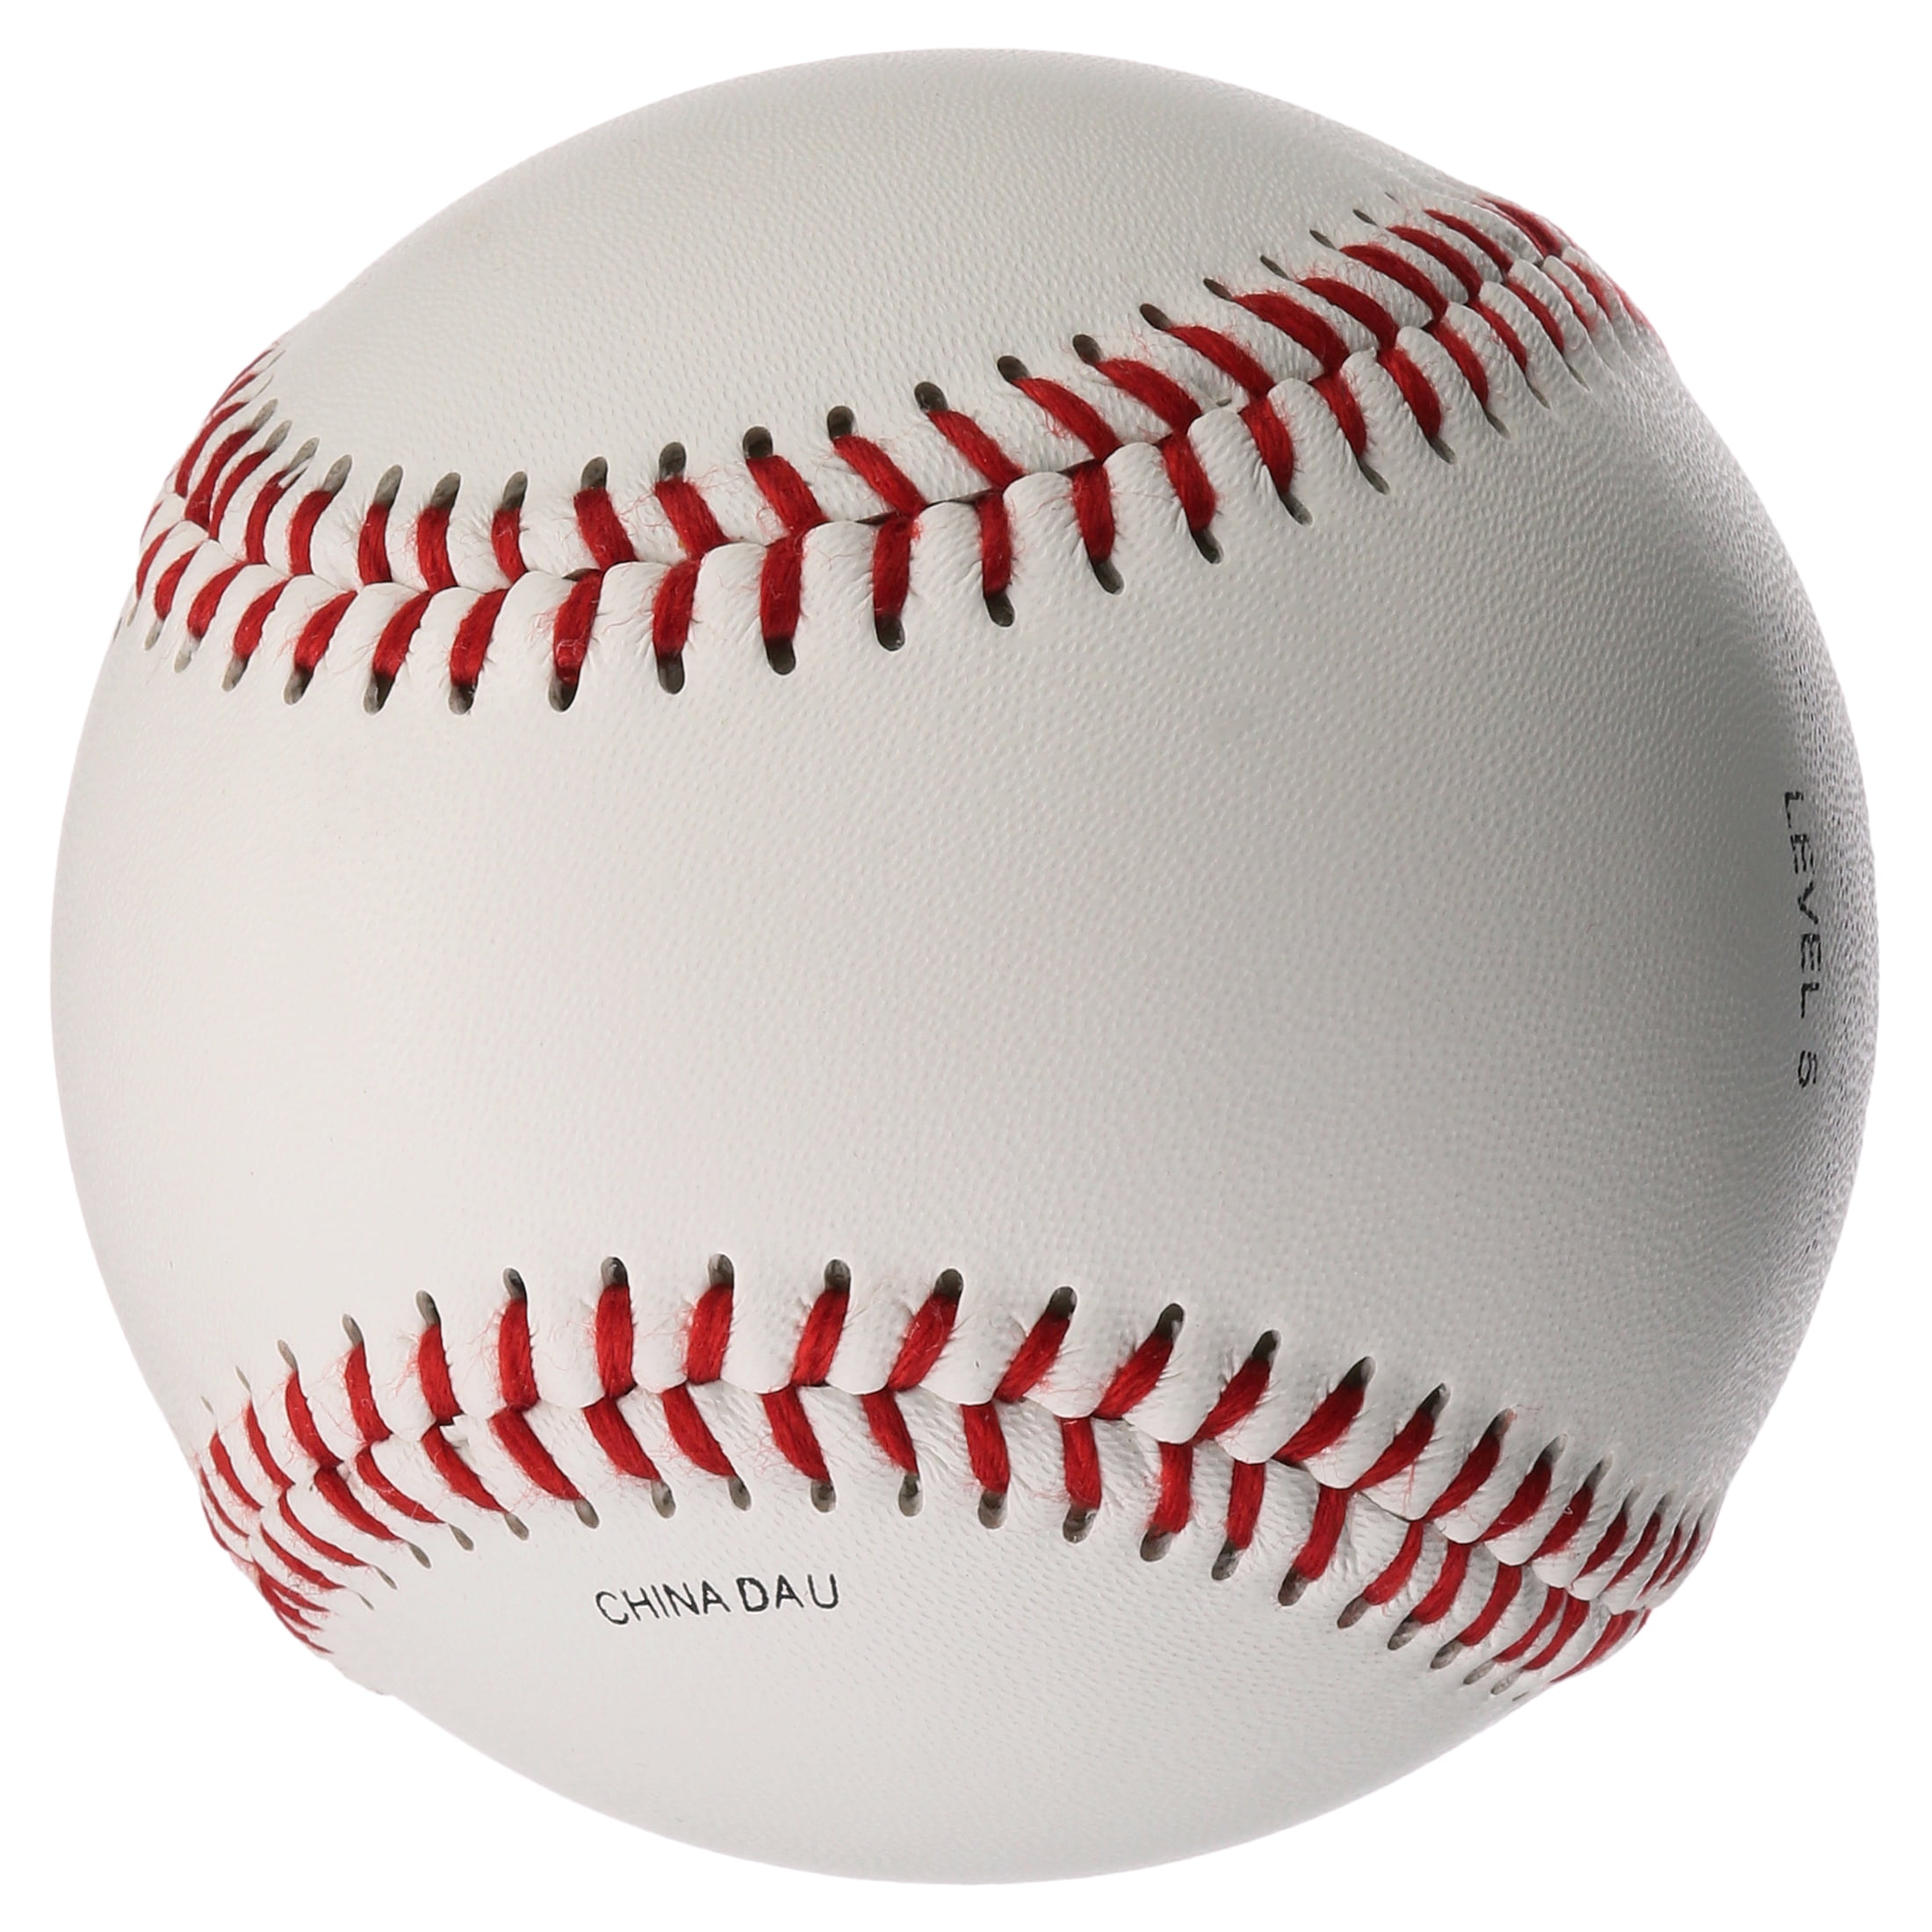 WILSON Sporting Goods Practice and Soft Compression Baseballs, A1217, FS  (One Dozen), white